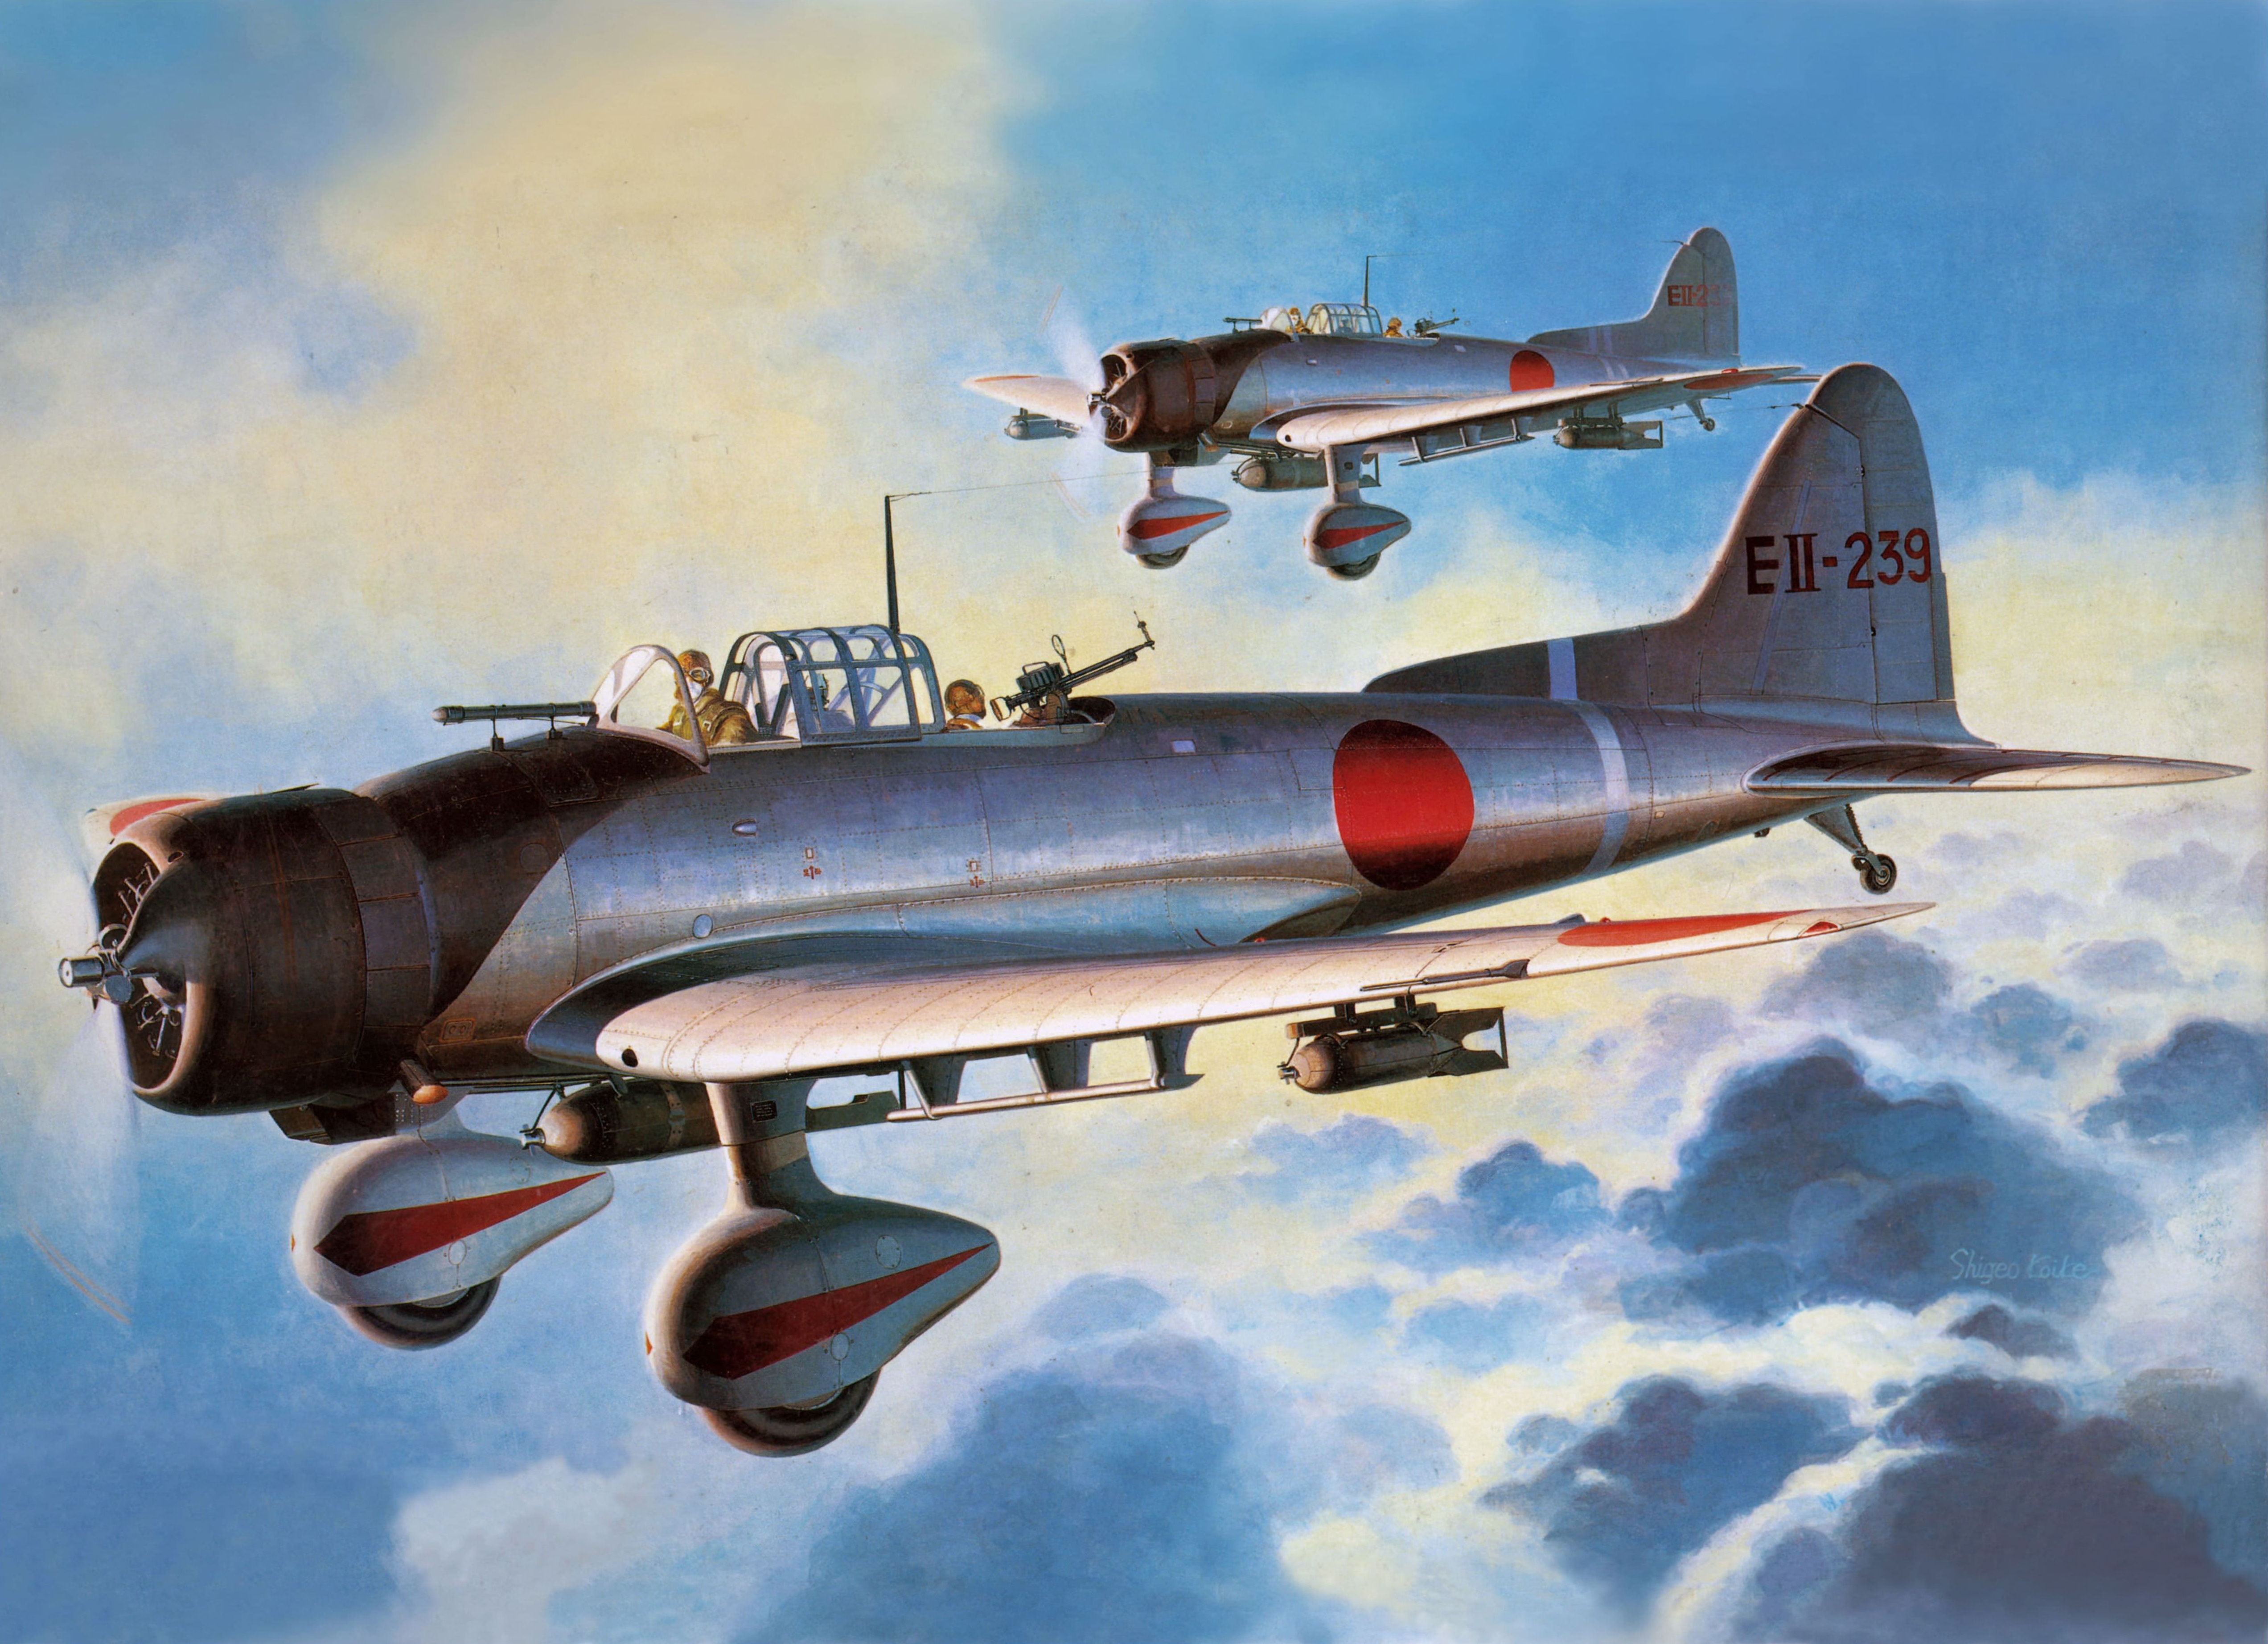 General 5088x3688 World War II airplane aircraft military aircraft military Japan Imperial Japanese Navy Pearl Harbor Dive bomber Aichi D3A Japanese aircraft